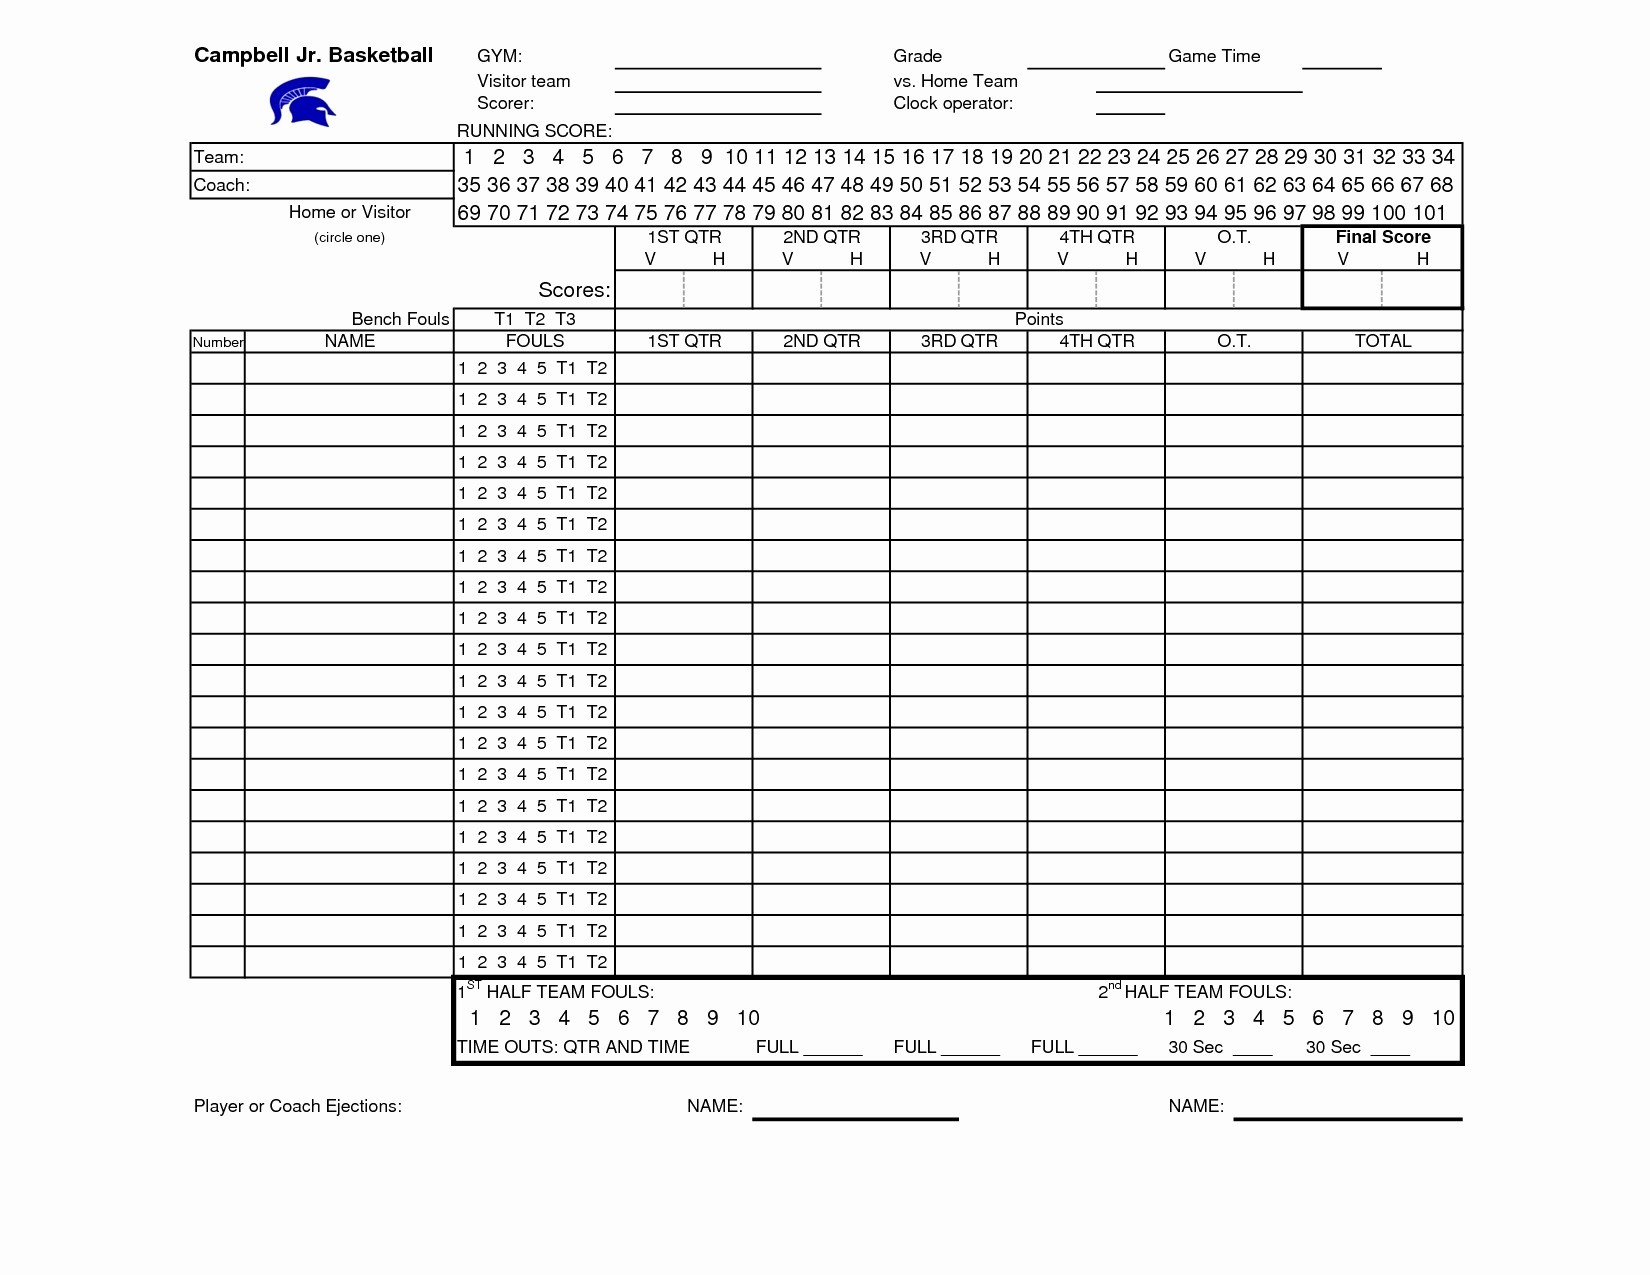 Baseball Stat Sheet Excel - petermcfarland.us